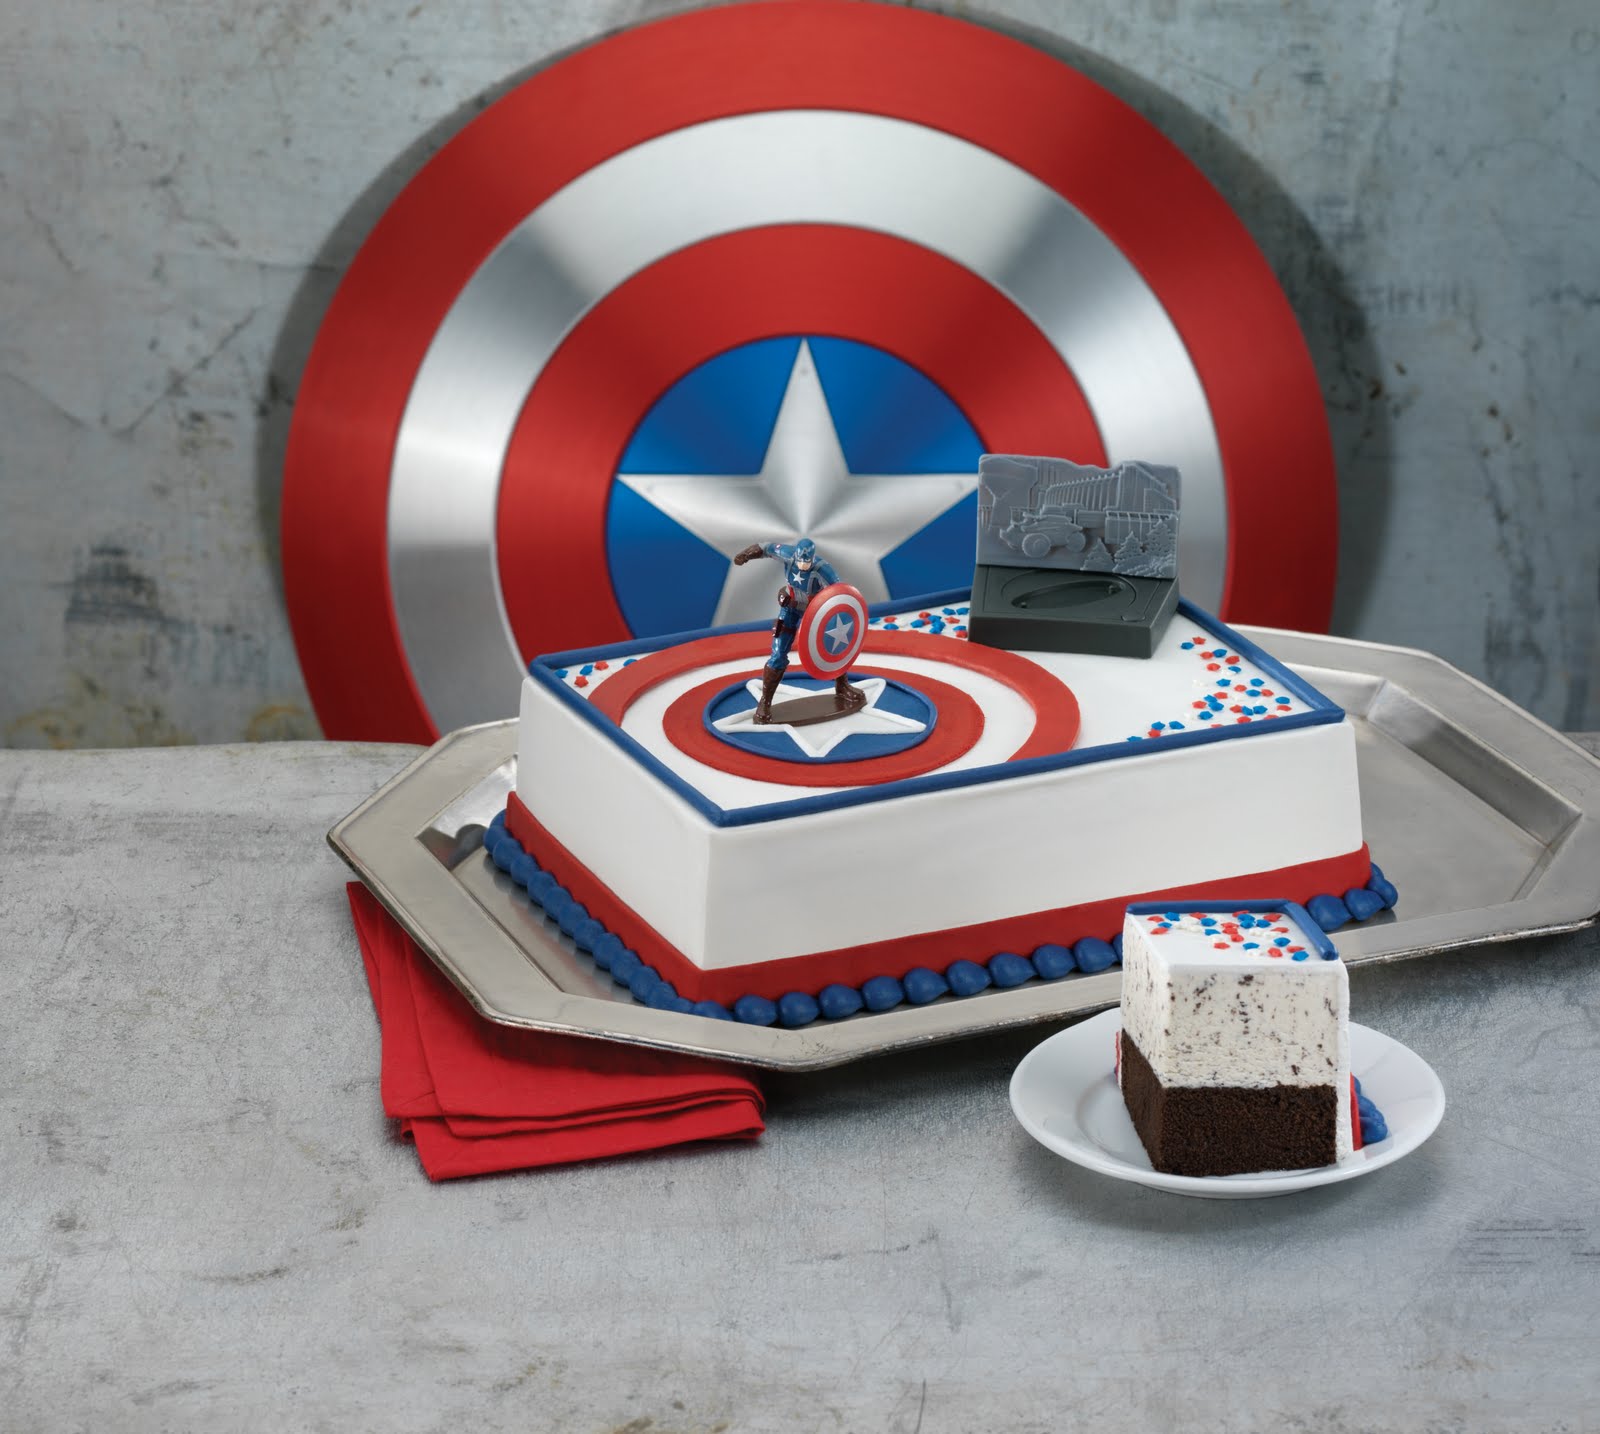 BaskinRobbins Captain America Ice Cream Cake Review The